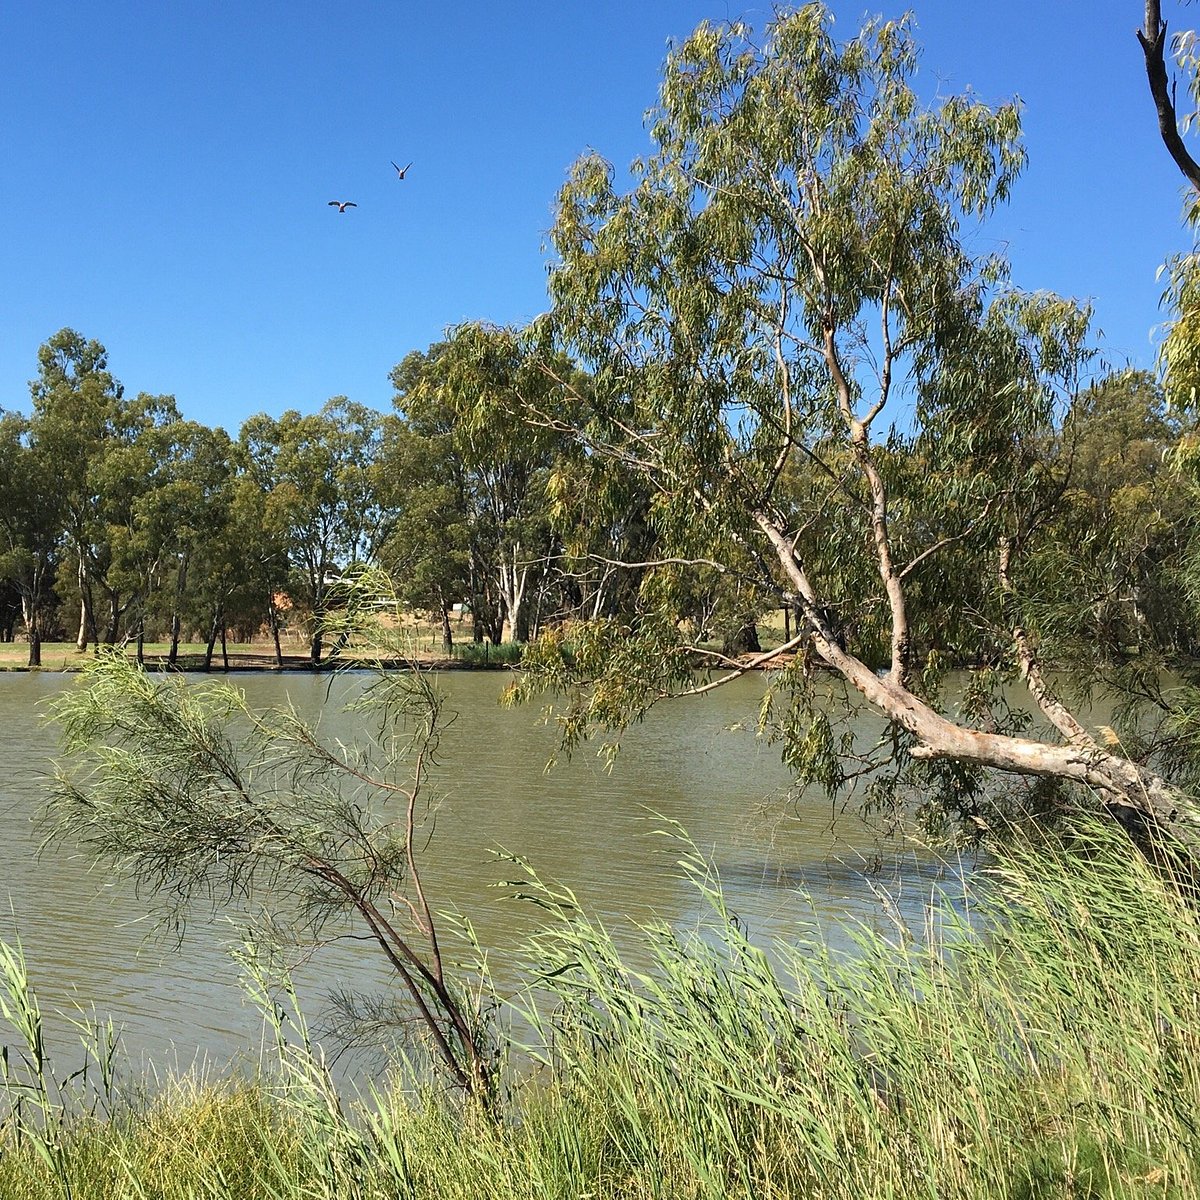 Река дарлинг полноводна круглый. Река Дарлинг. Река Вентворт. Река Дарлинг в Австралии фото. Darling River.